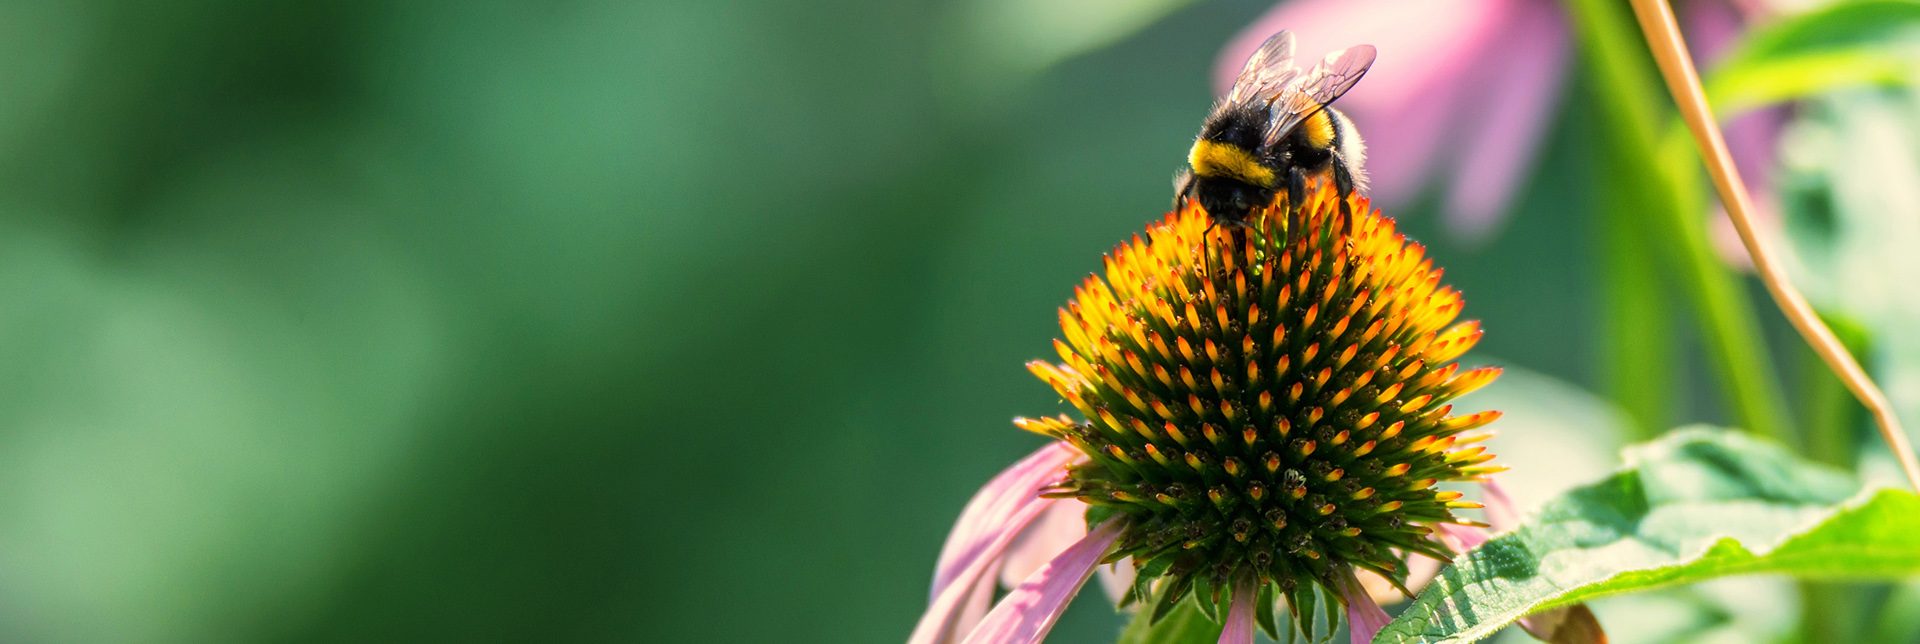 pollination-how-it-works-header.jpg